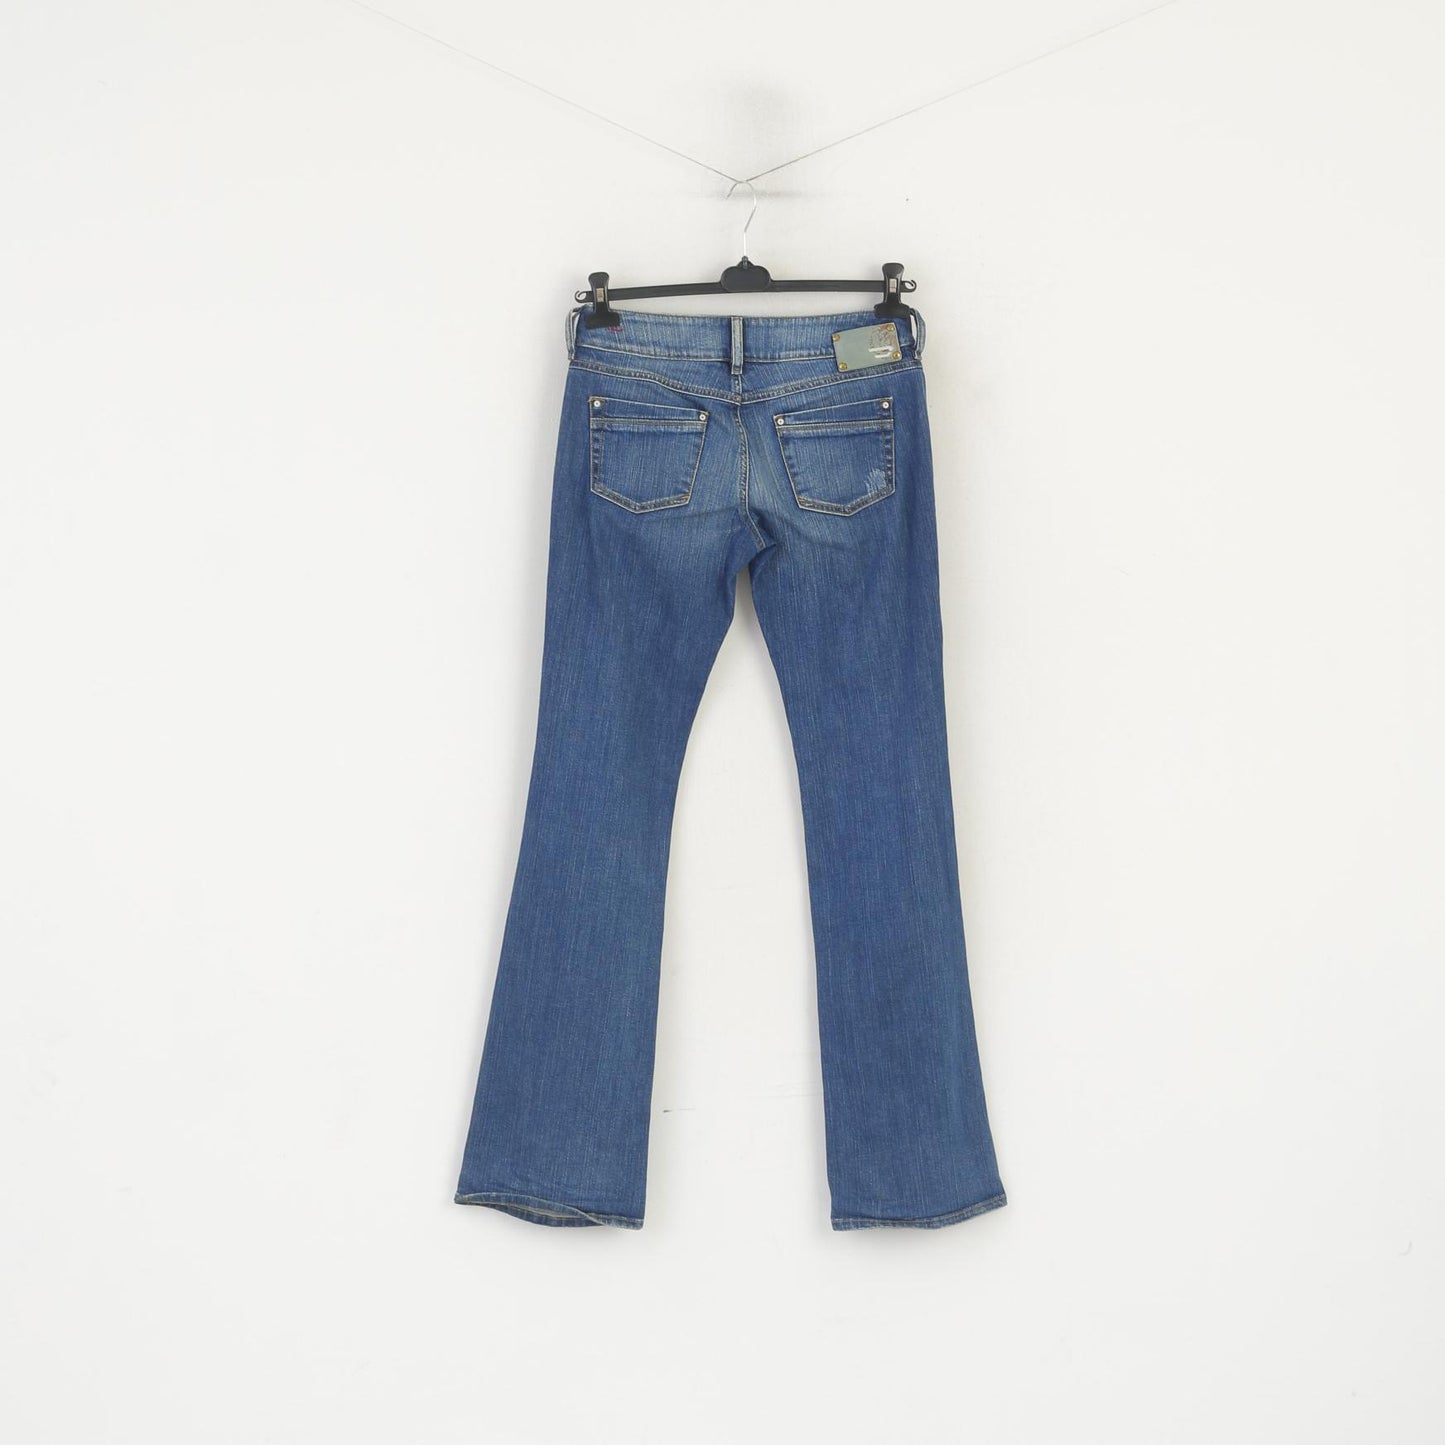 Diesel Industry Women 28 Jeans Trousers Blue Denim Cotton Ronhar Stretch Pants